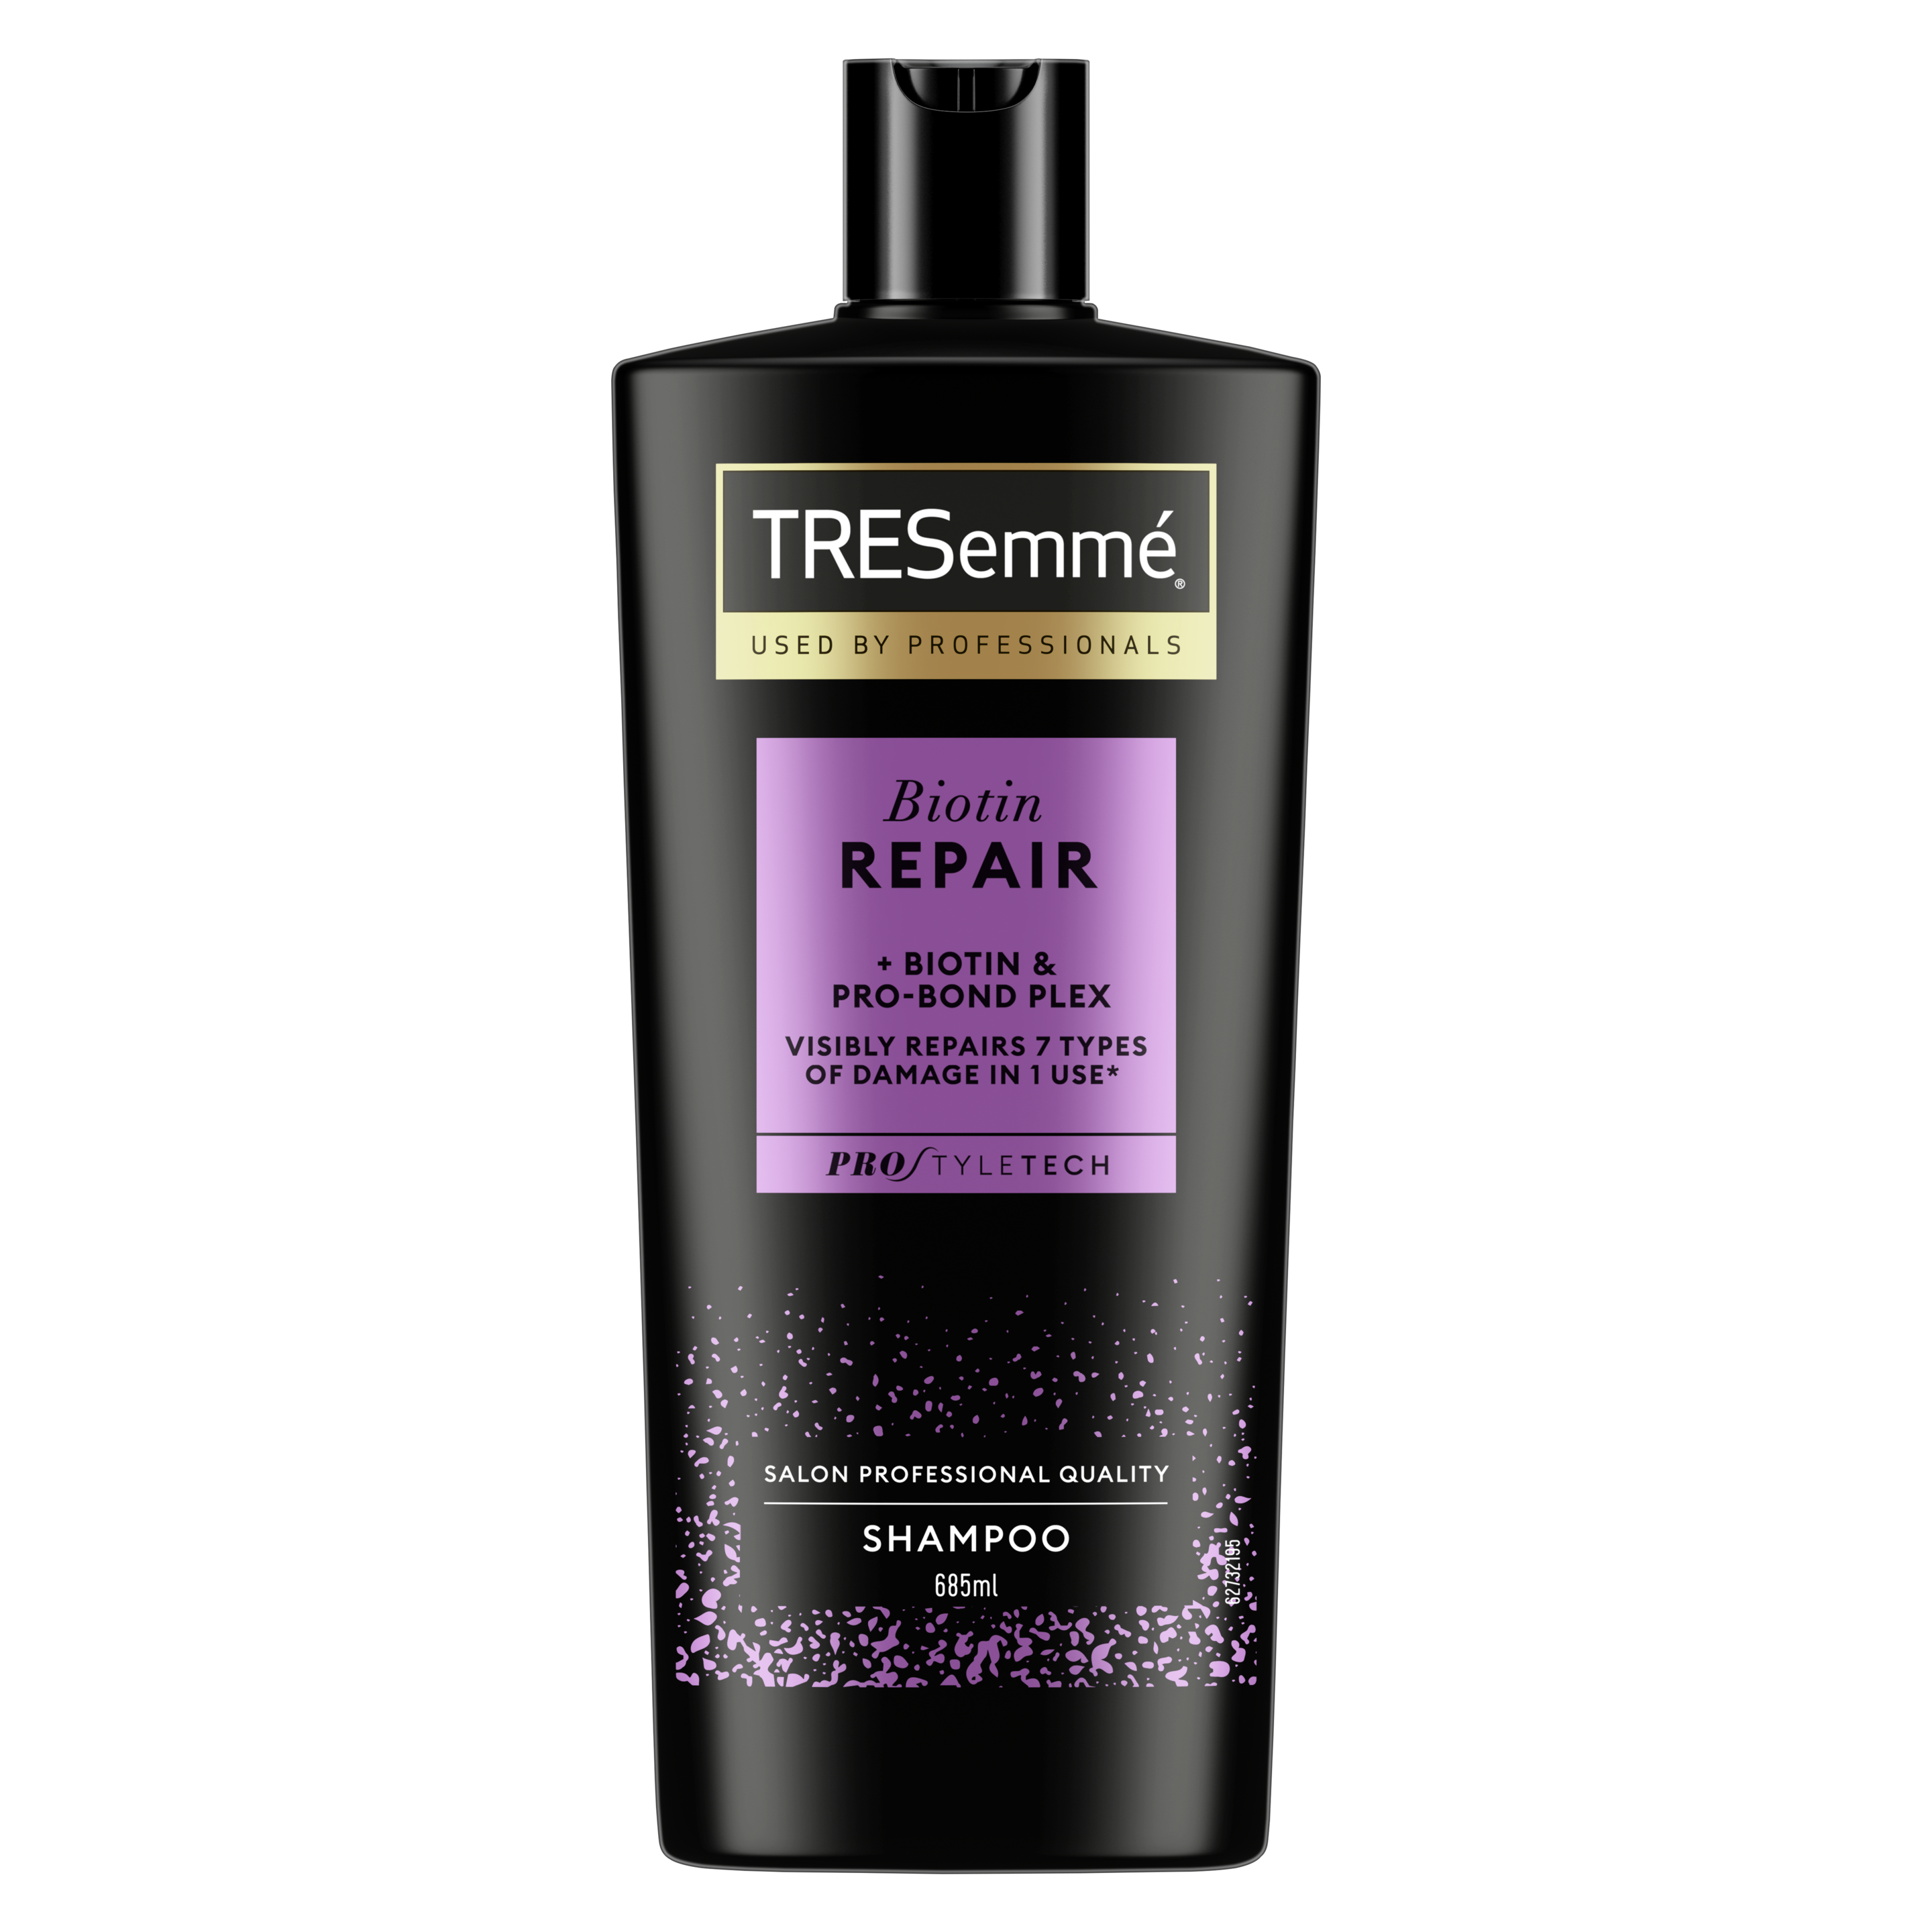 Biotin Repair shampoo 685ml